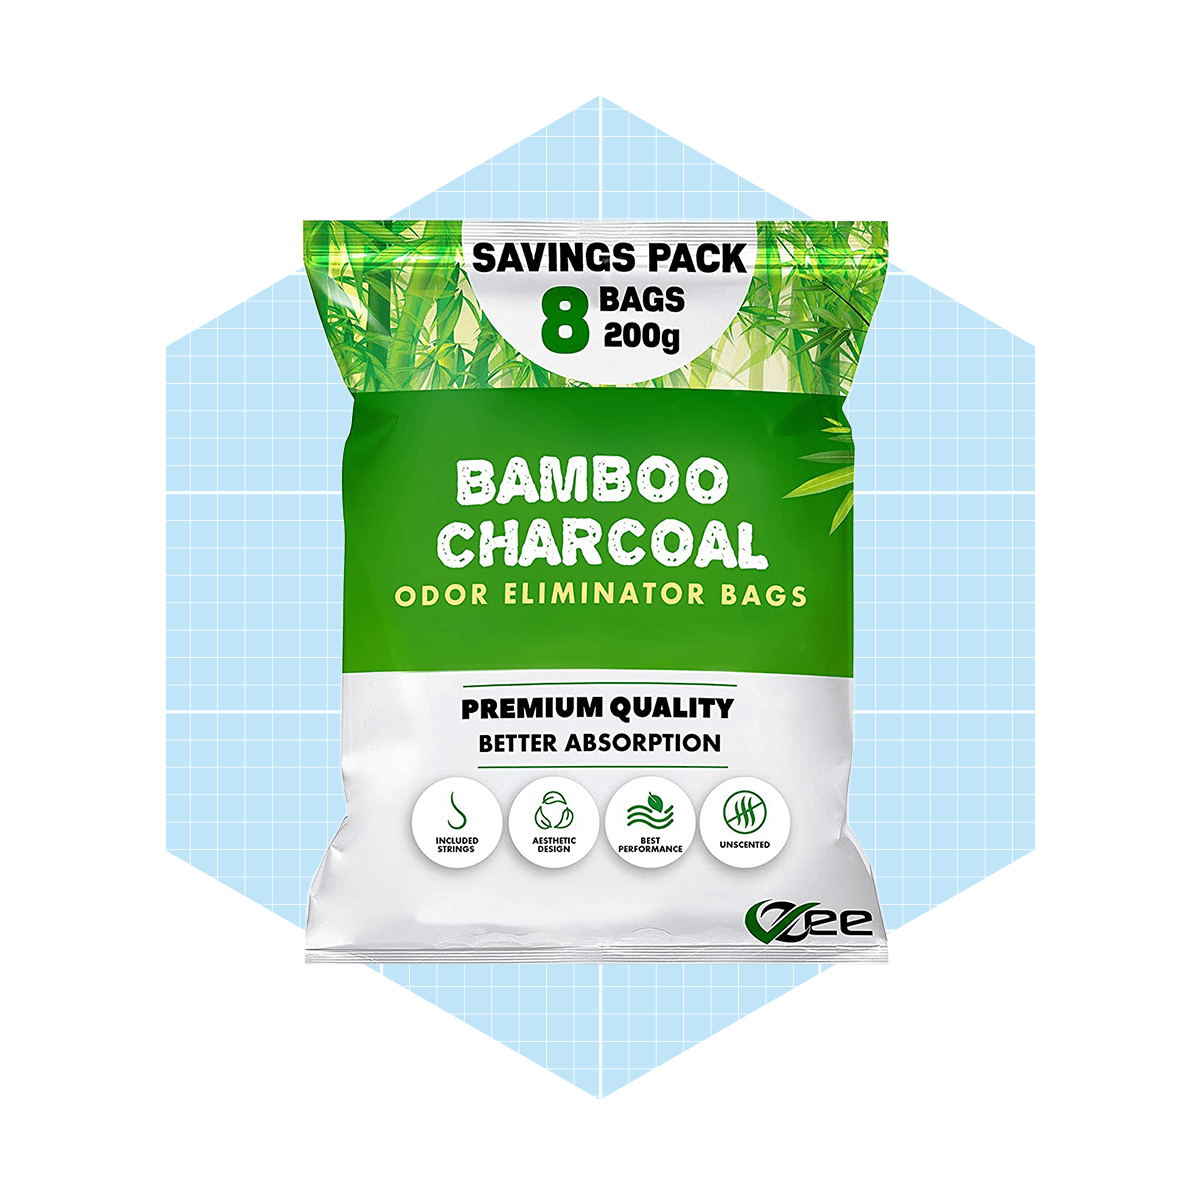 Vzee Charcoal Bags Odor Absorber Ecomm Via Amazon.com